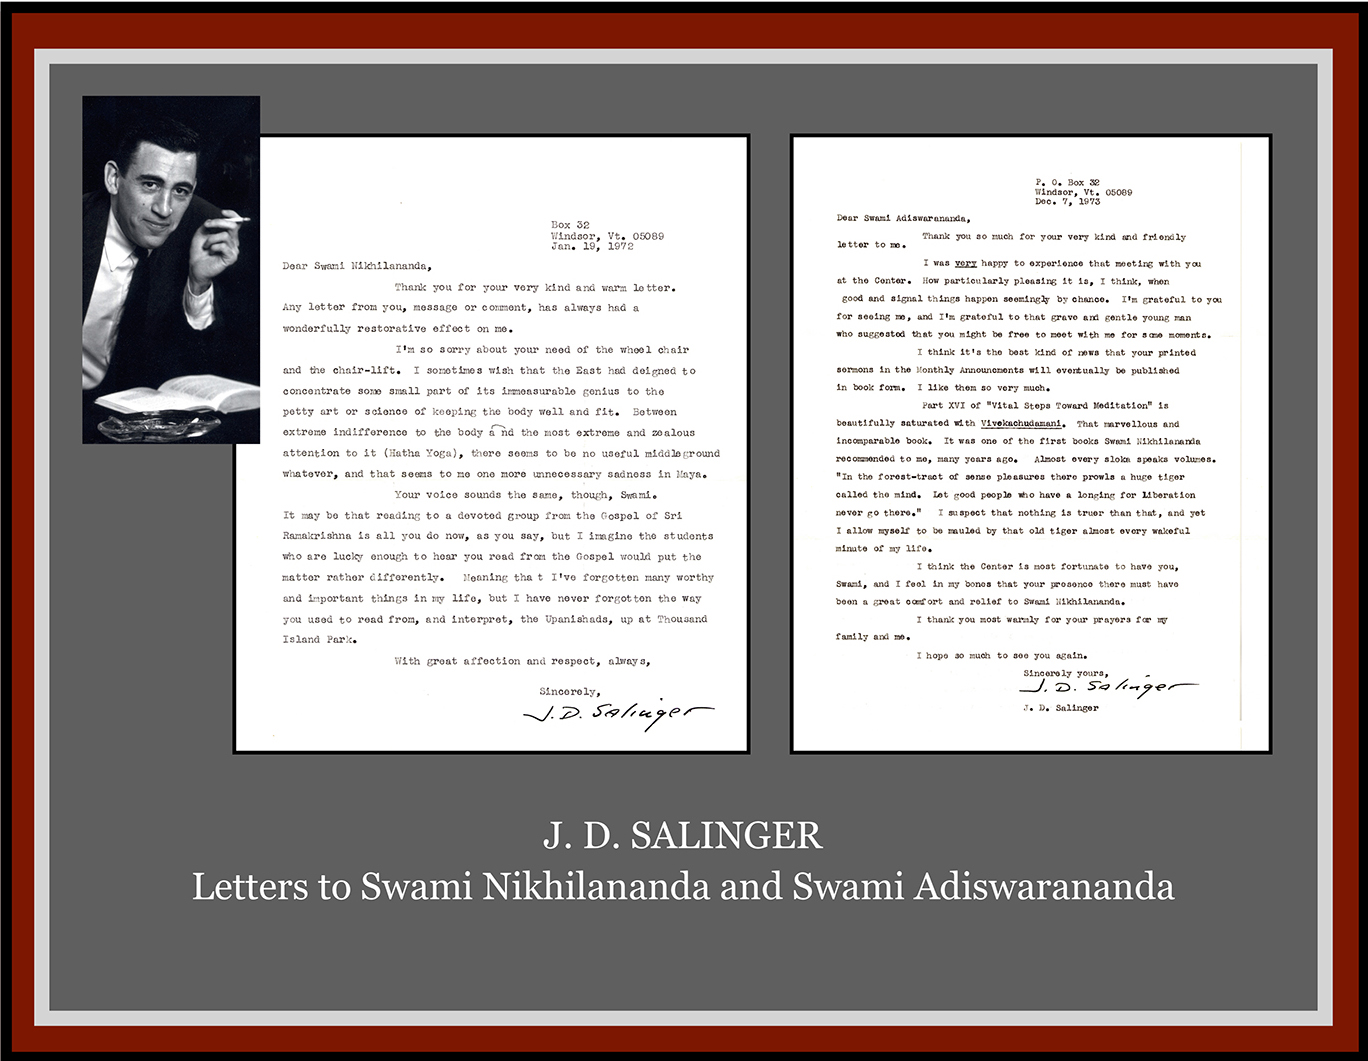 letters to Swami Nikhilananda and Swami Adiswarananda from J.D. Salinger.